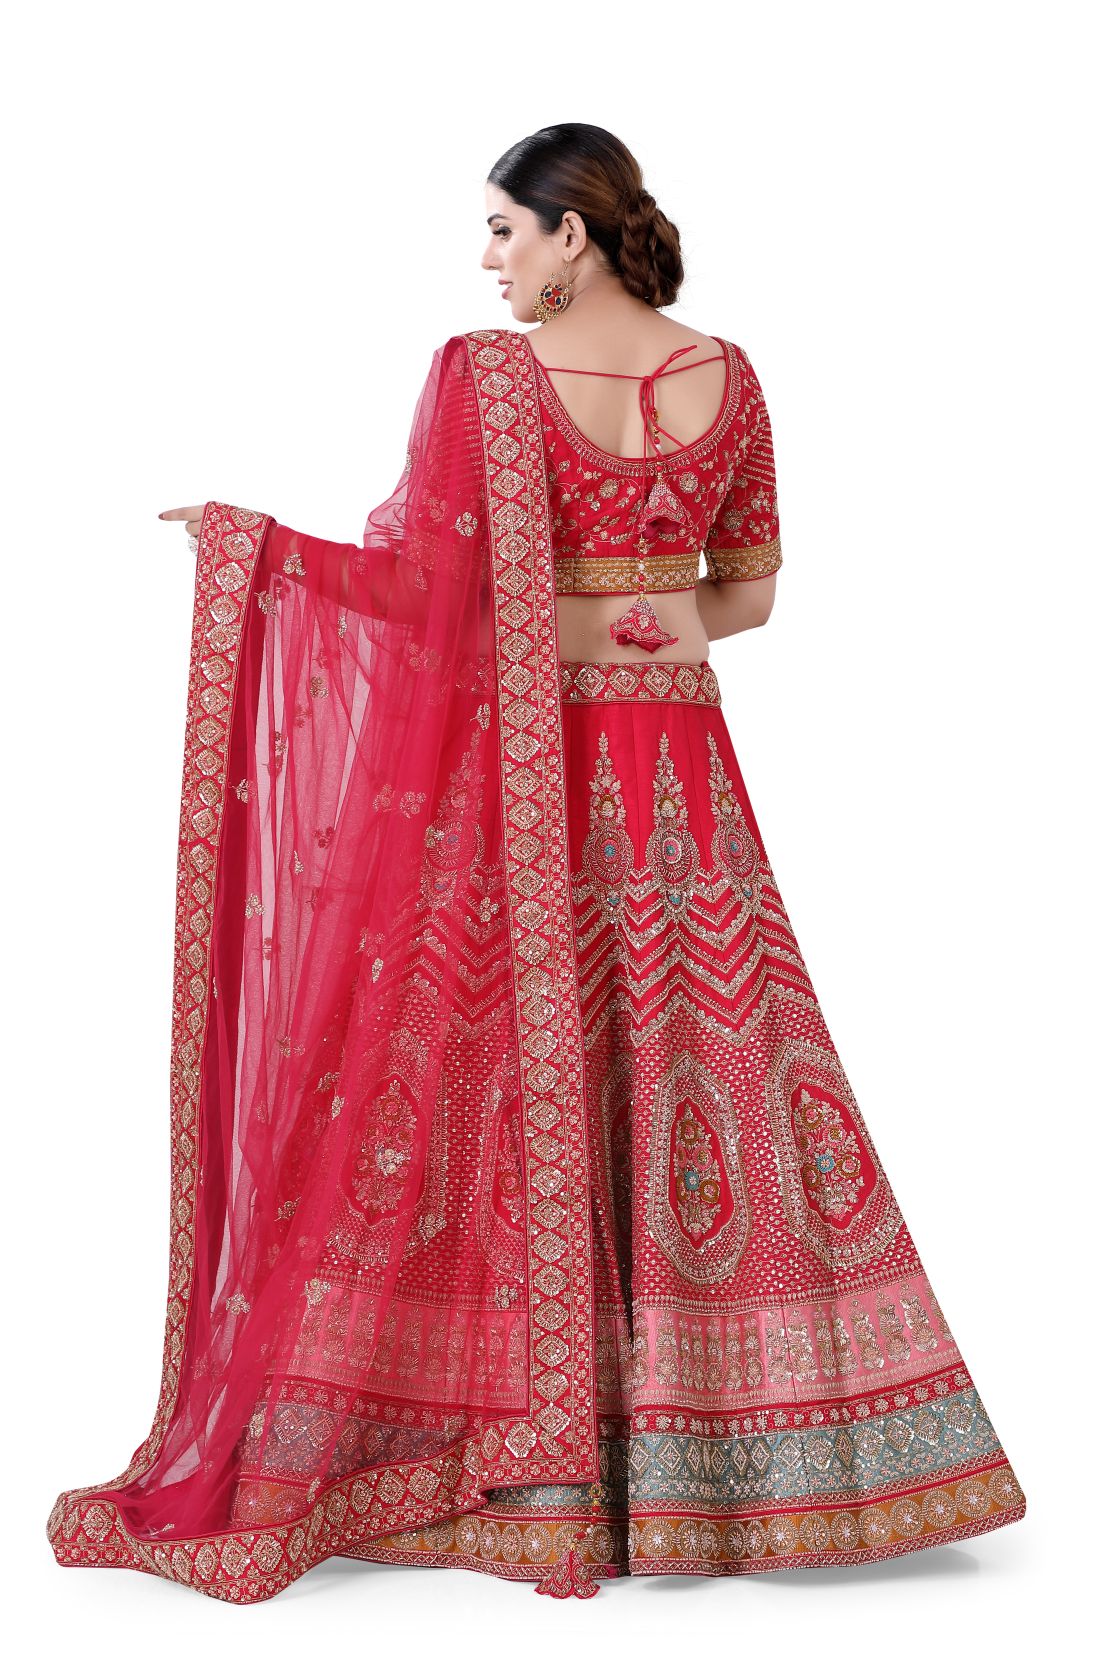 Red Silk Bridal Lehenga Choli - Premium Bridal lehenga from Dulhan Exclusives - Just $3685! Shop now at Dulhan Exclusives